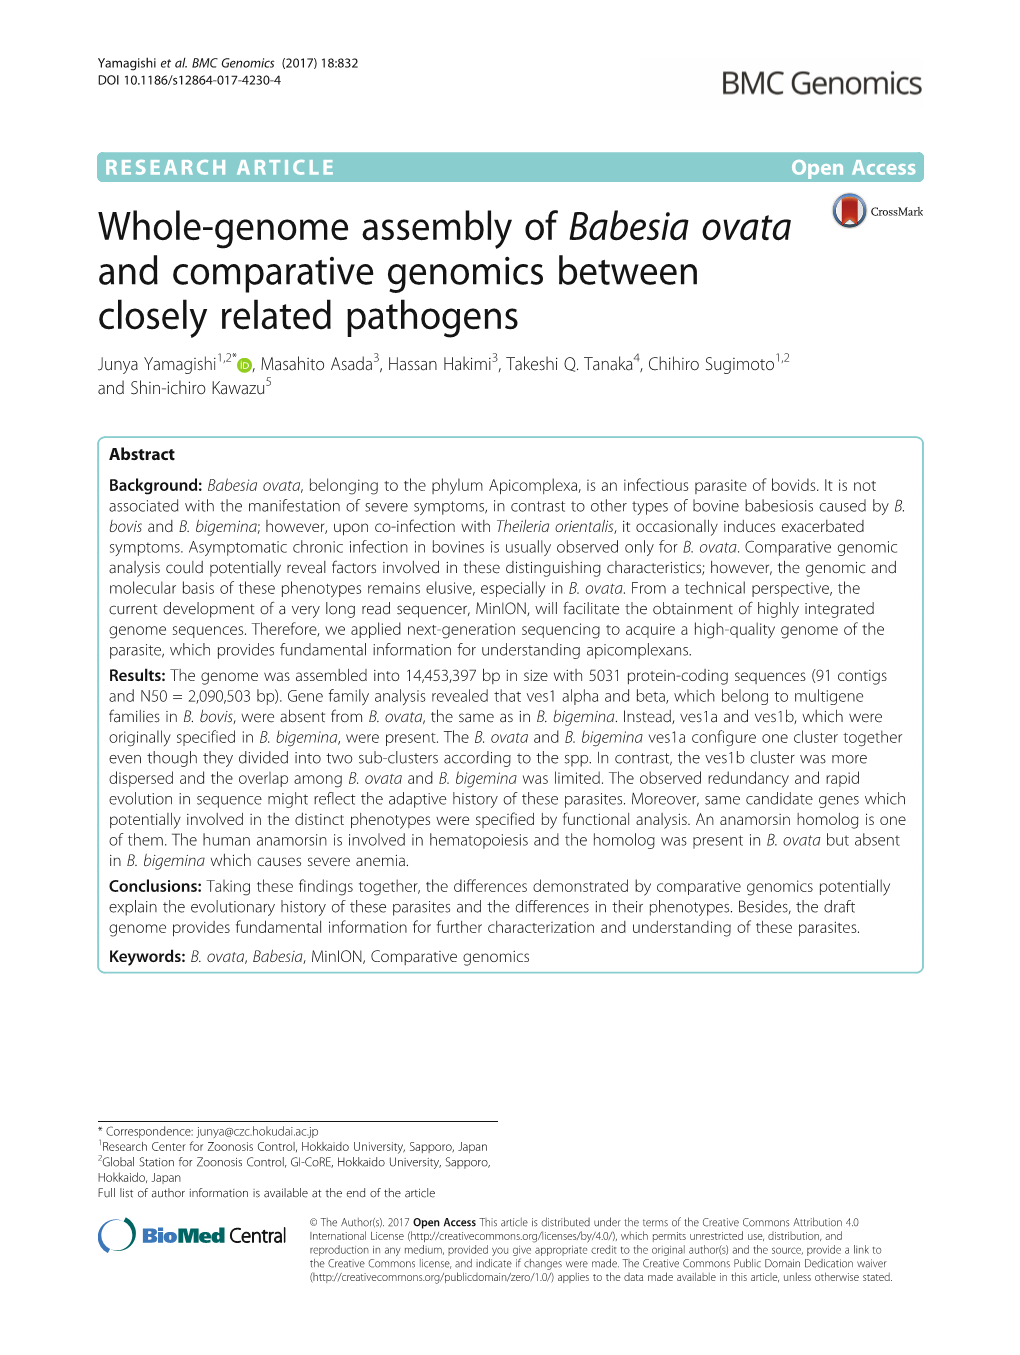 Whole-Genome Assembly of Babesia Ovata and Comparative Genomics Between Closely Related Pathogens Junya Yamagishi1,2* , Masahito Asada3, Hassan Hakimi3, Takeshi Q